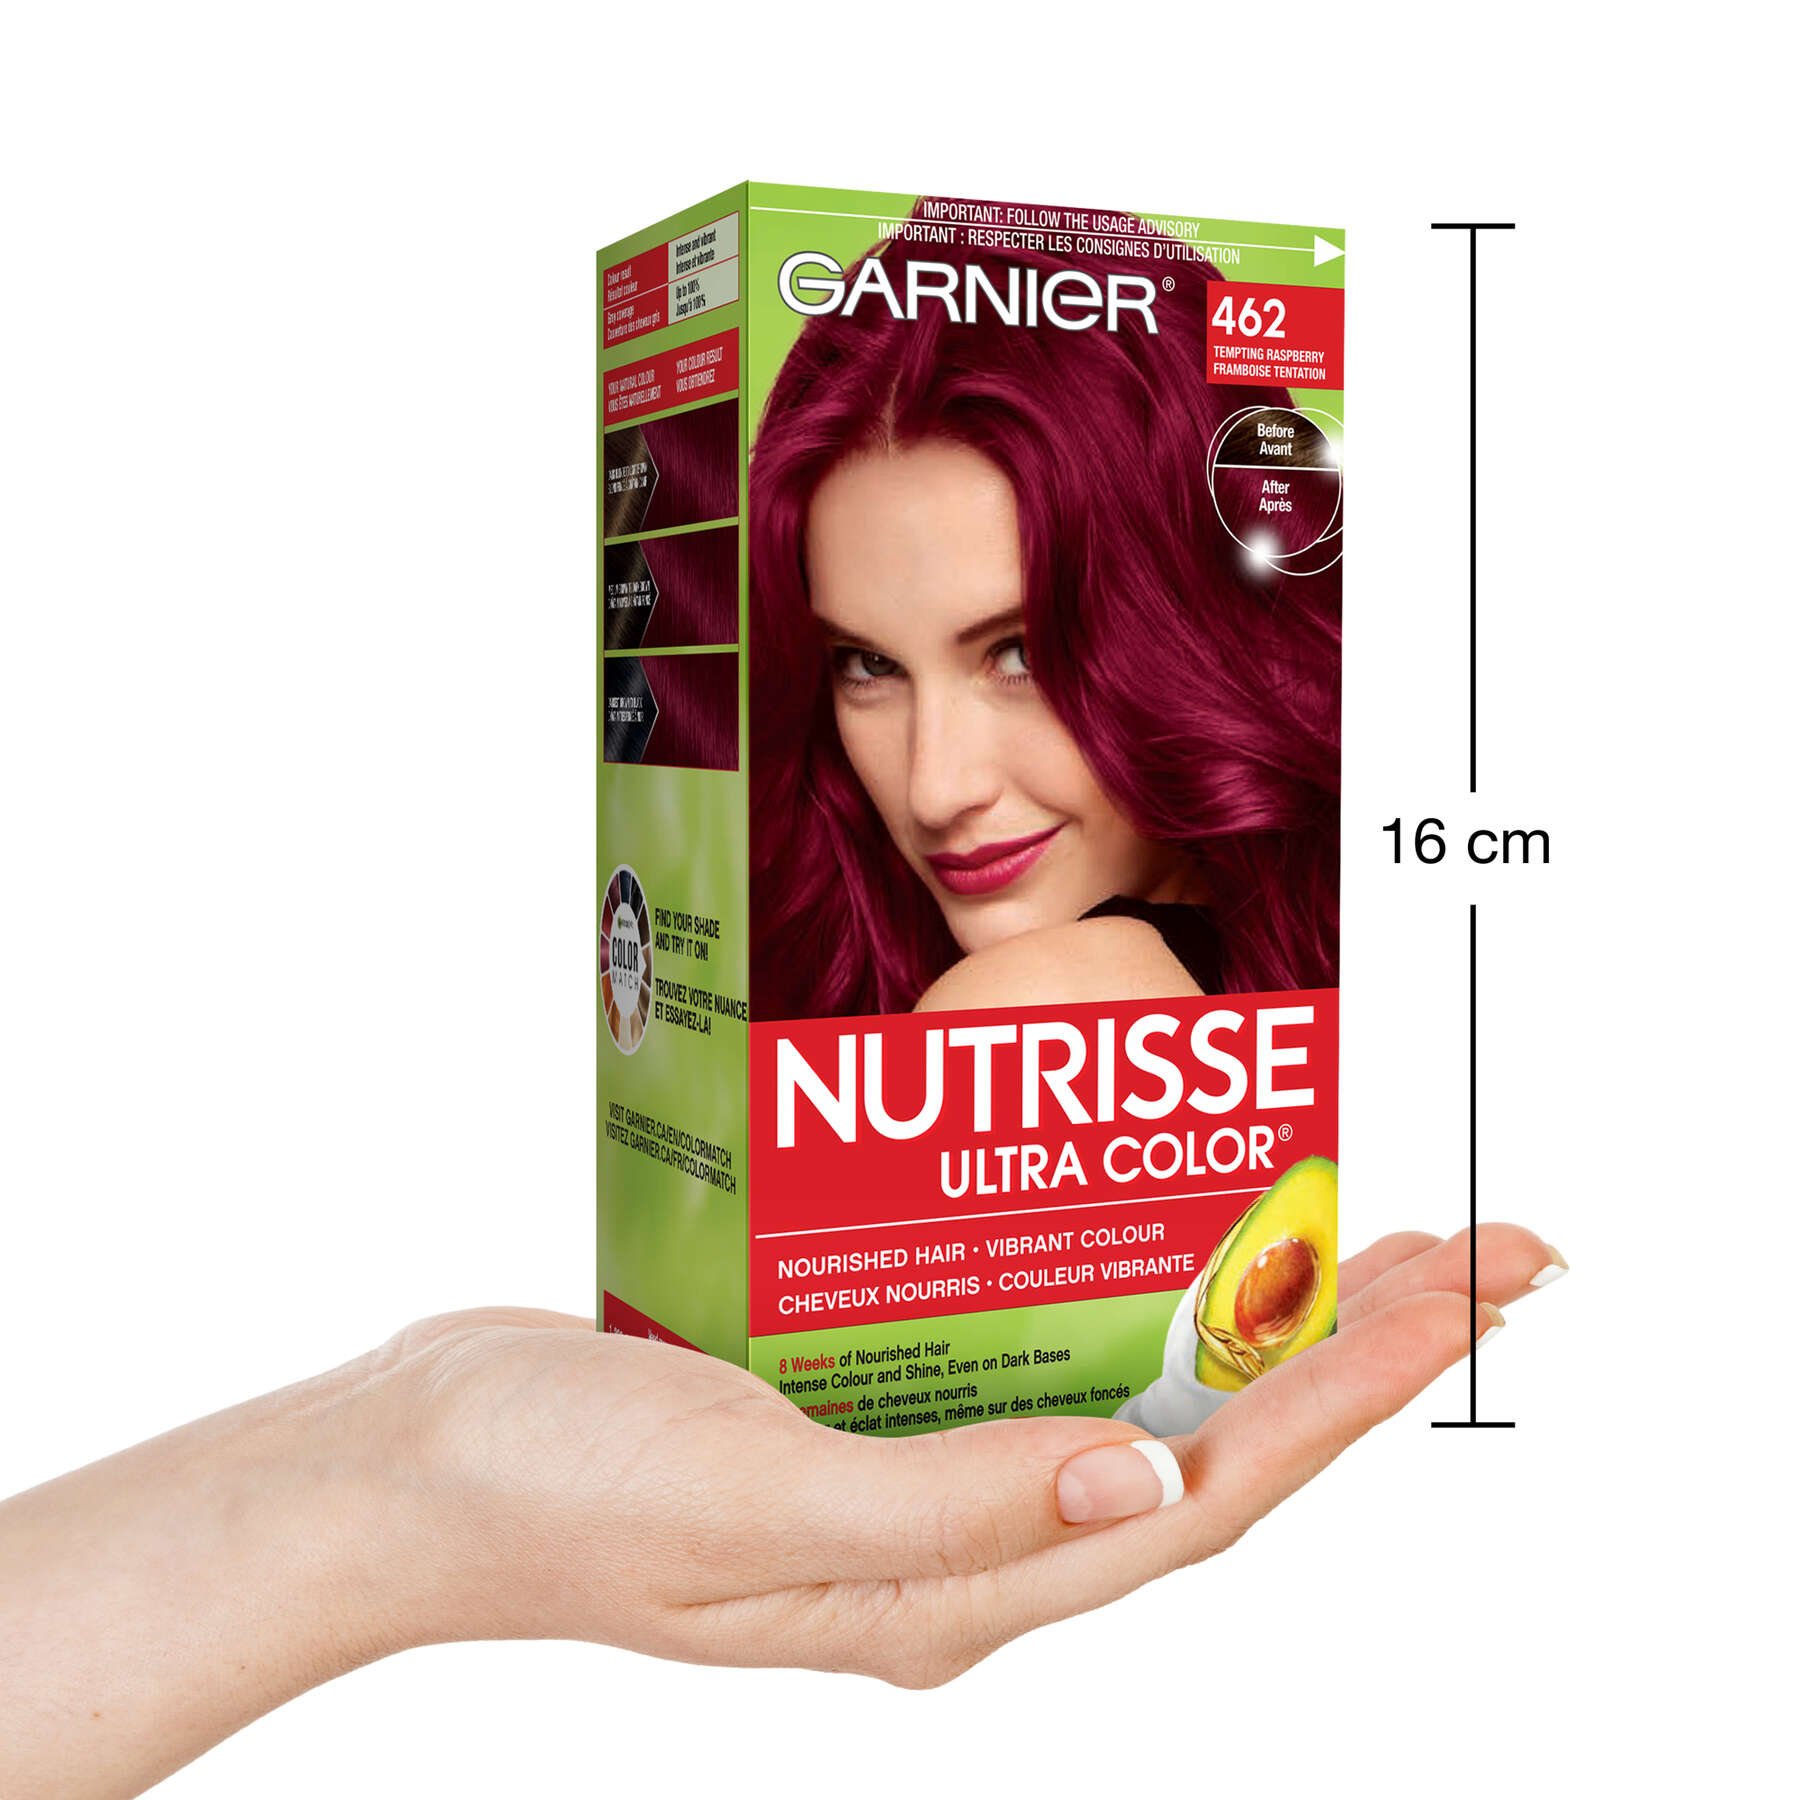 garnier hair dye nutrisse ultra color 462 tempting raspberry 603084498420 inhand